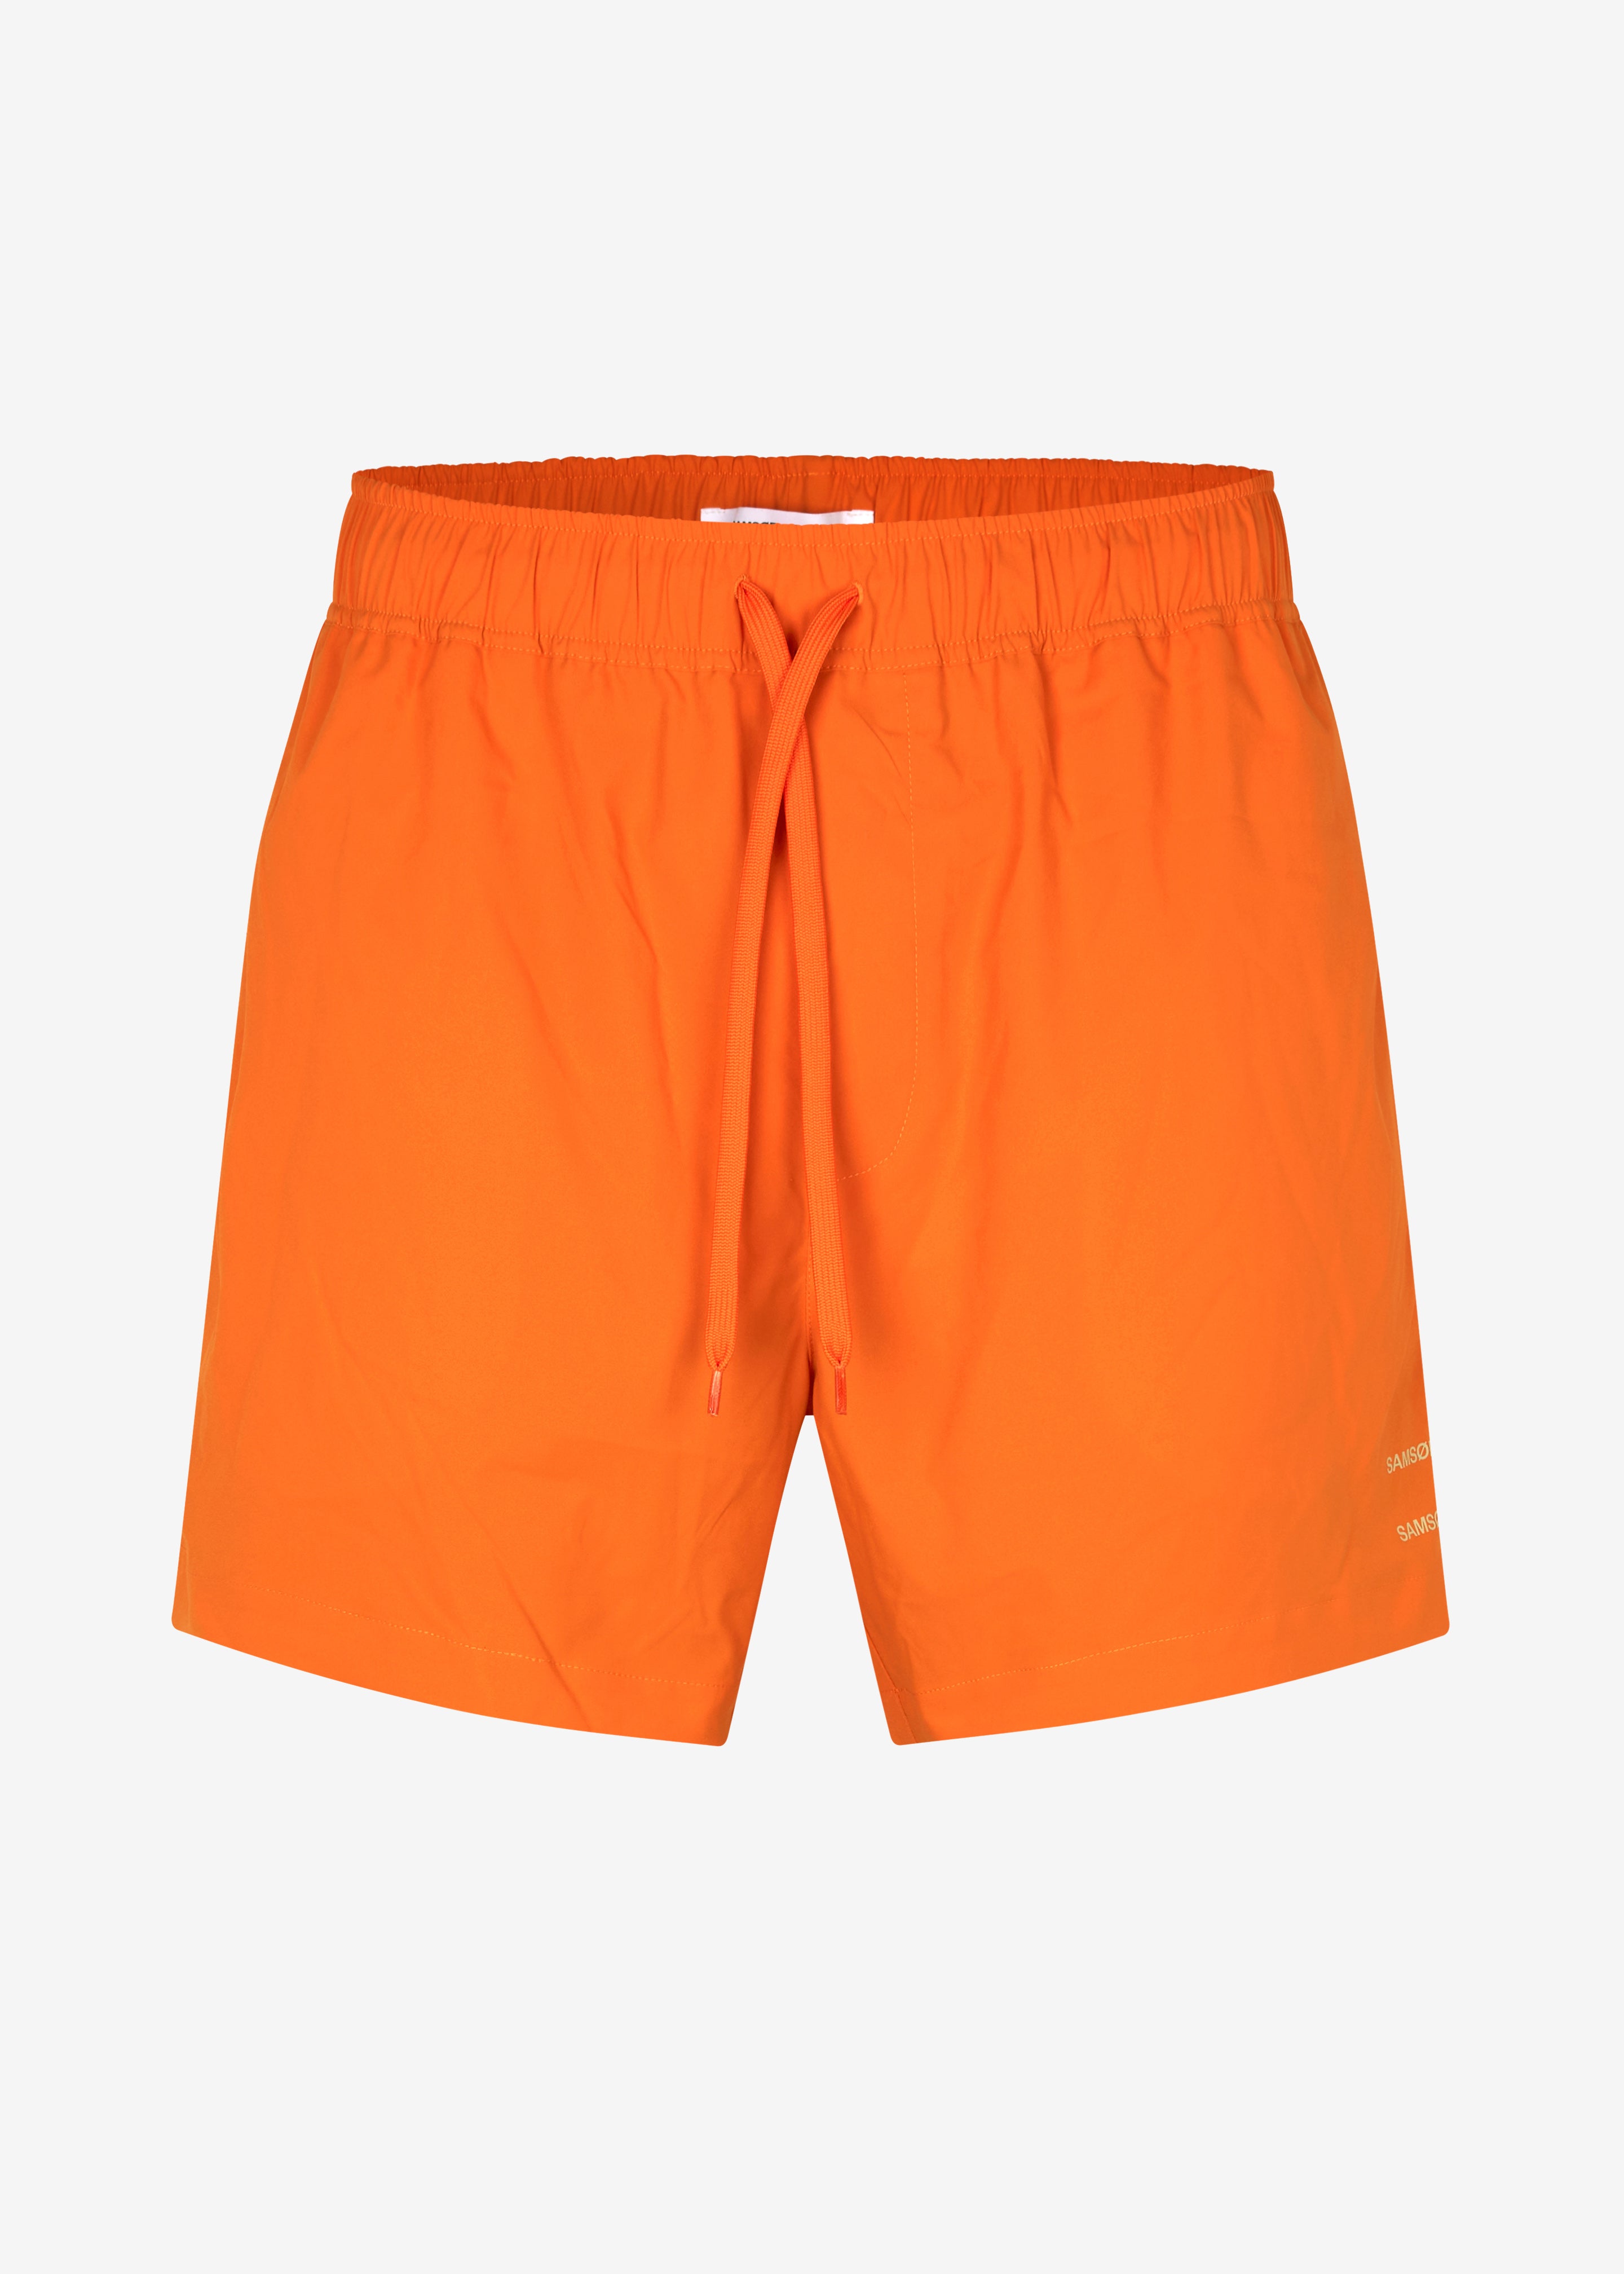 Samsøe Samsøe Moses Swim Shorts - Persimmon Orange - 5